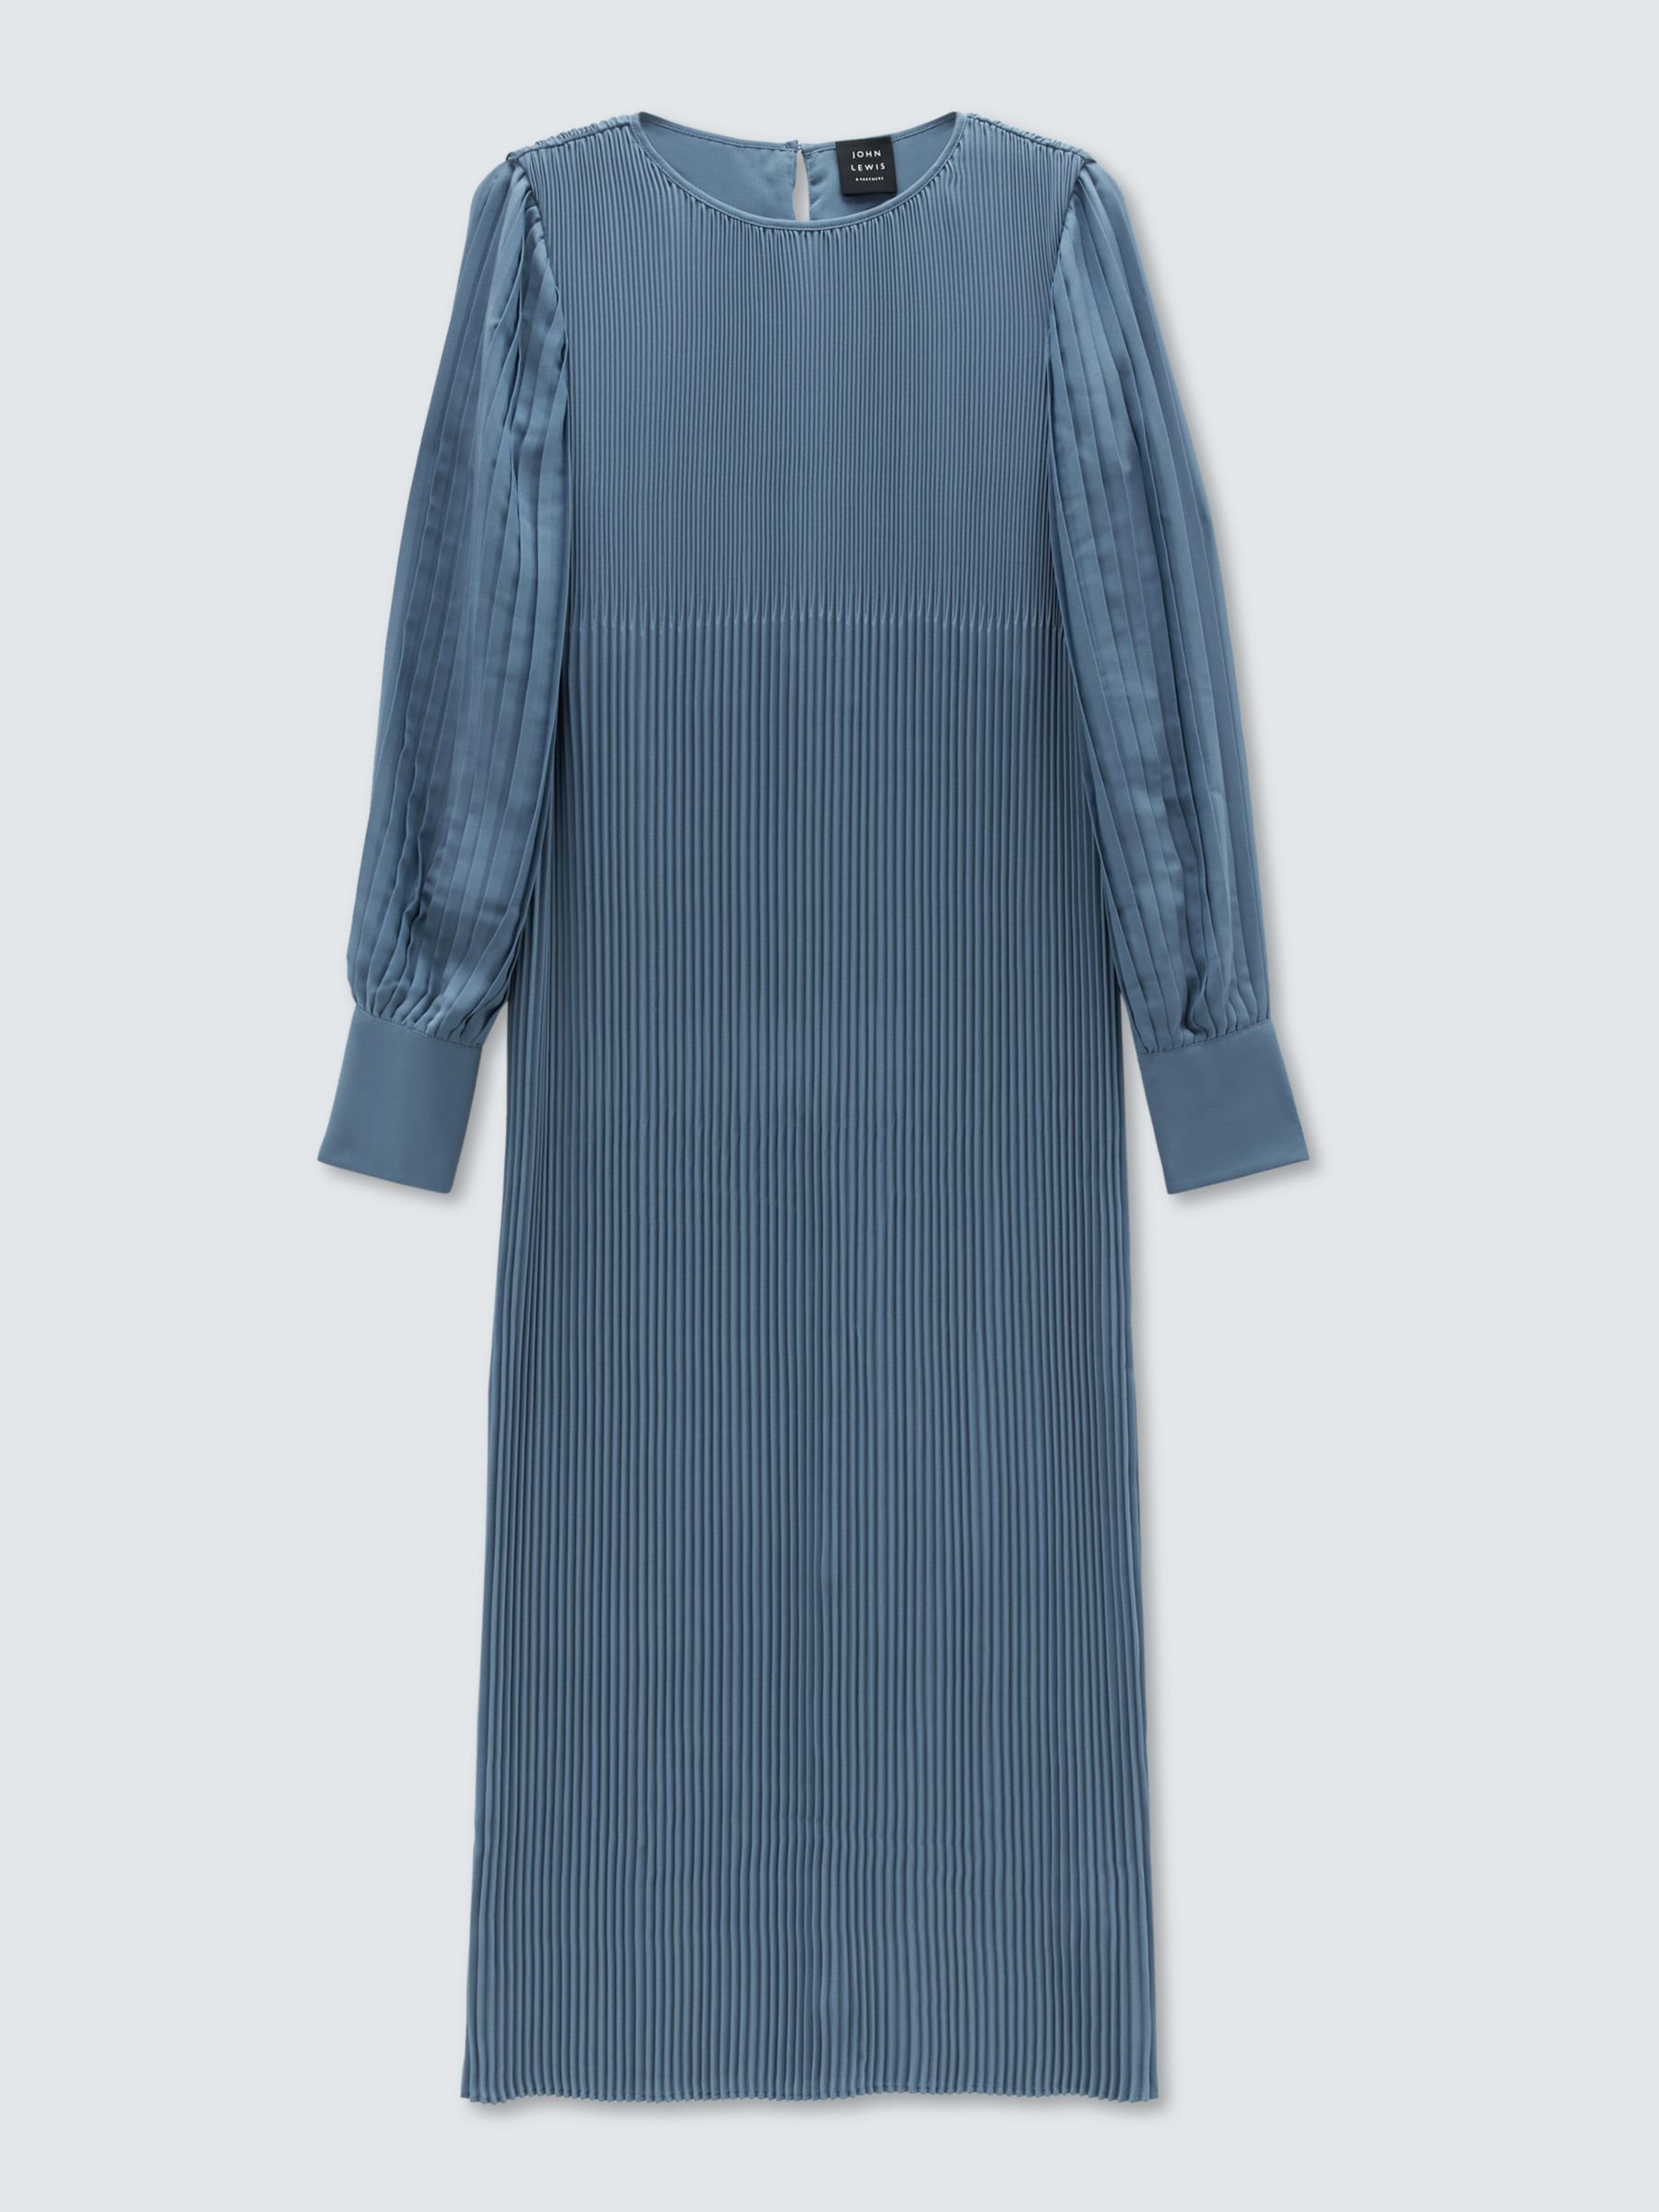 Buy John Lewis Pleated Midi Dress Online at johnlewis.com